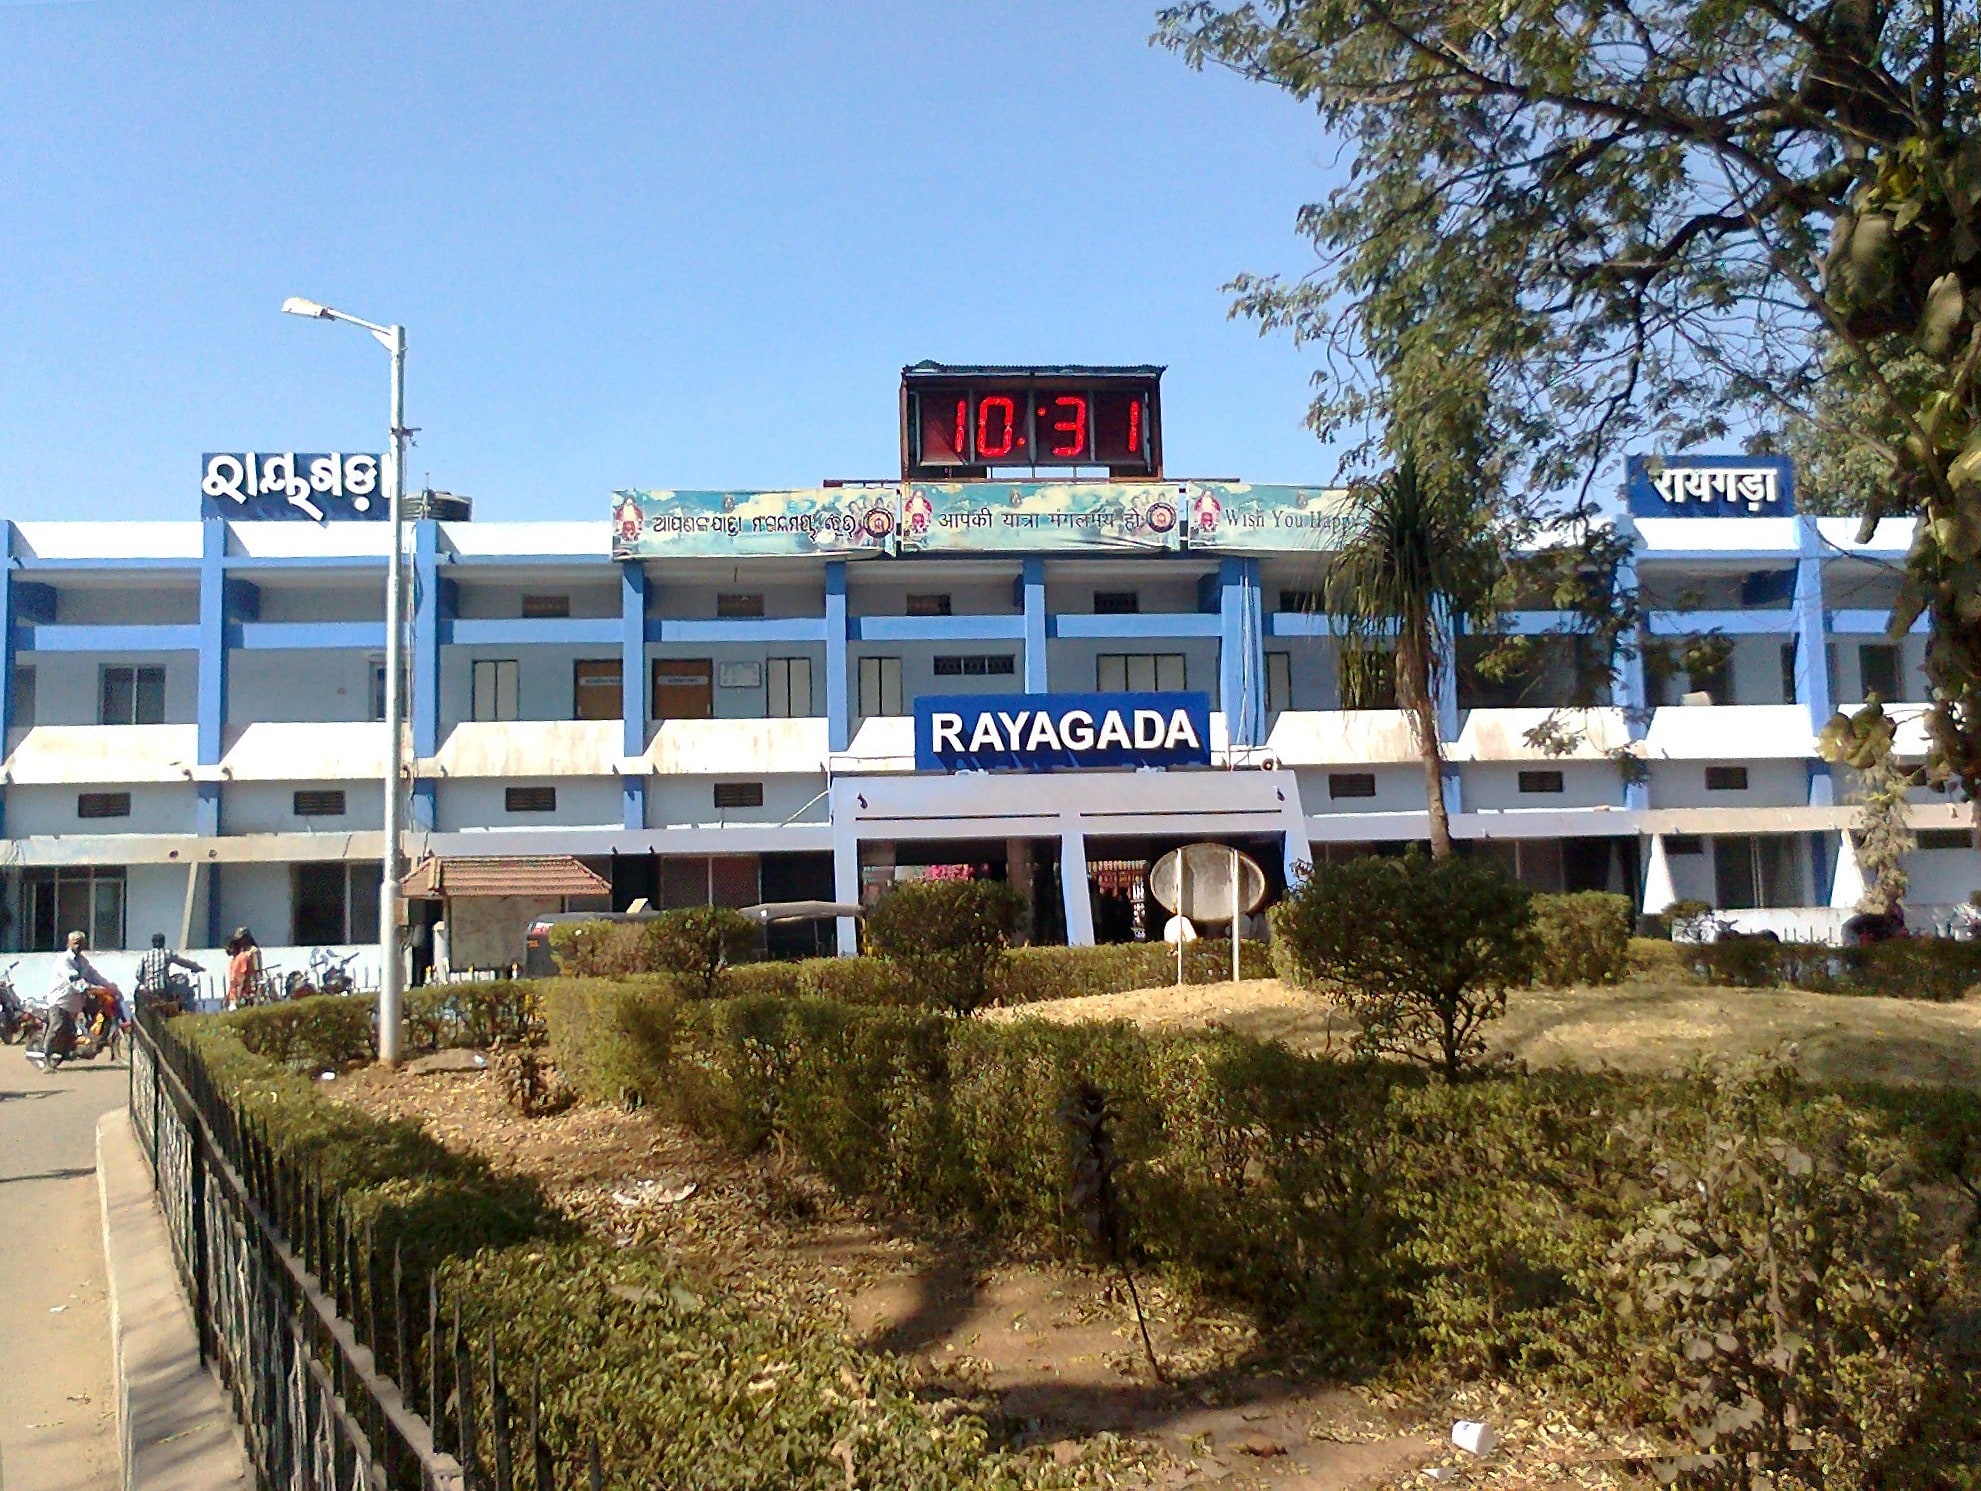 Rayagada, India